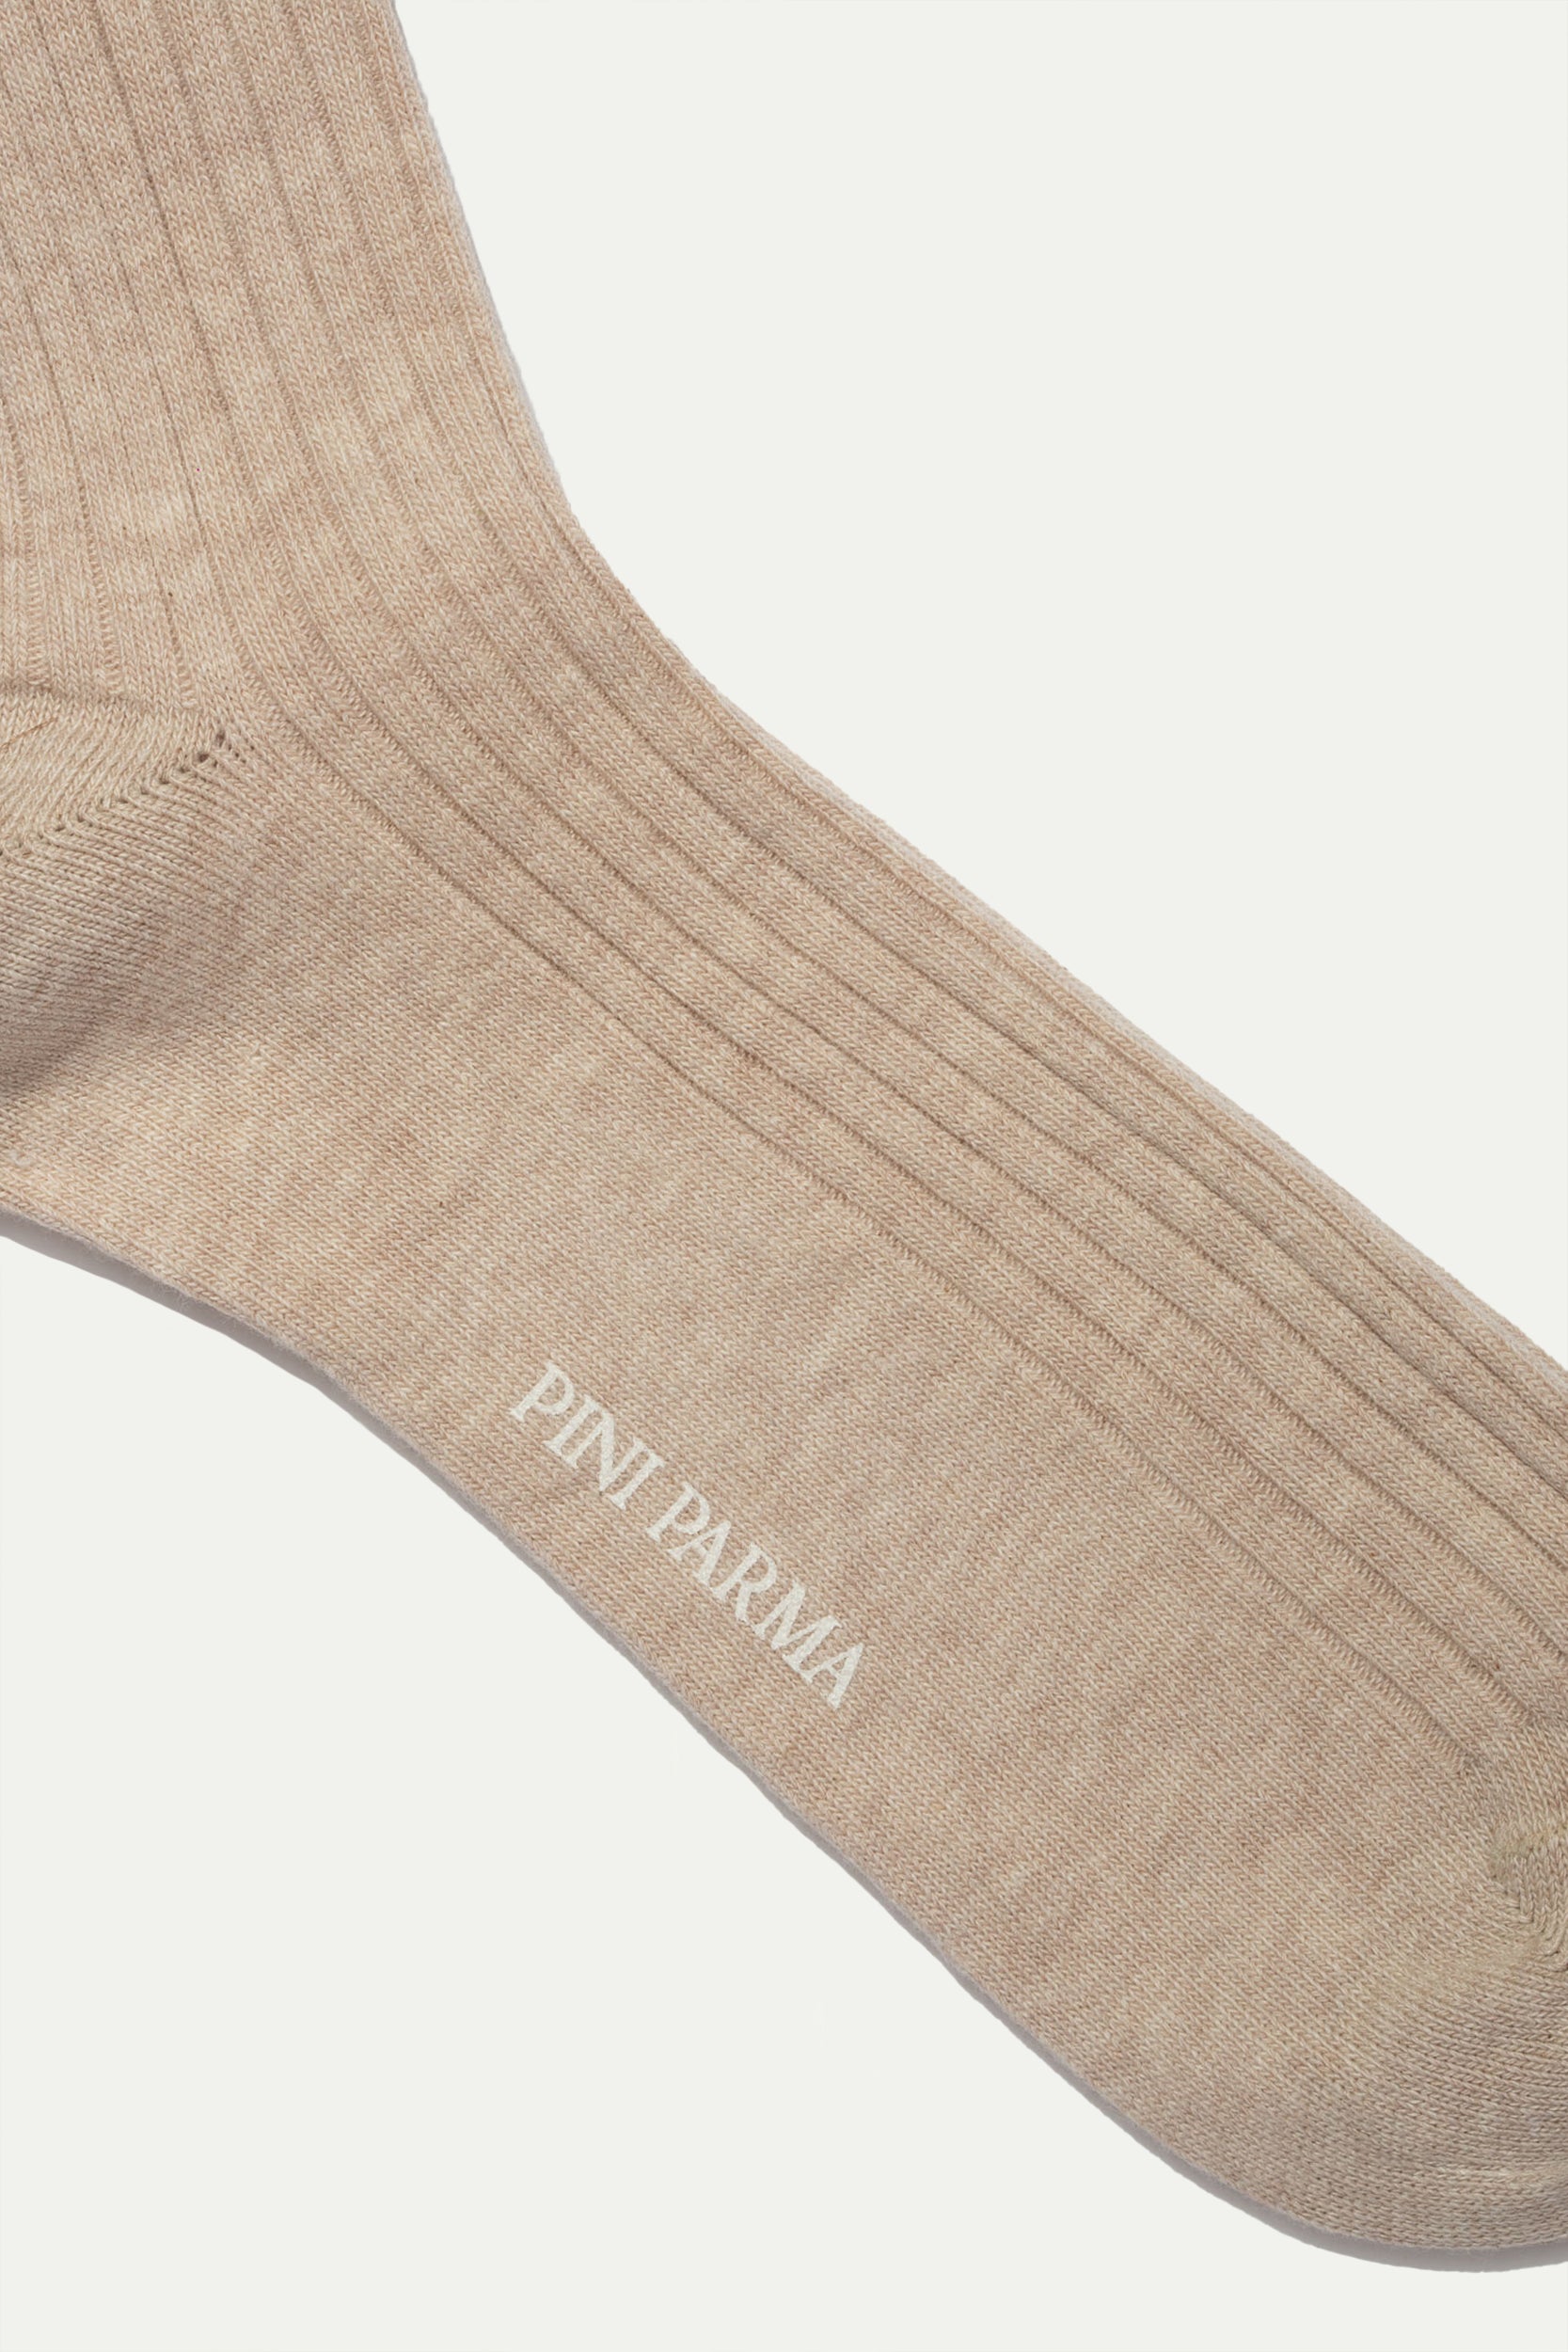 Beige sport socks - Made in Italy